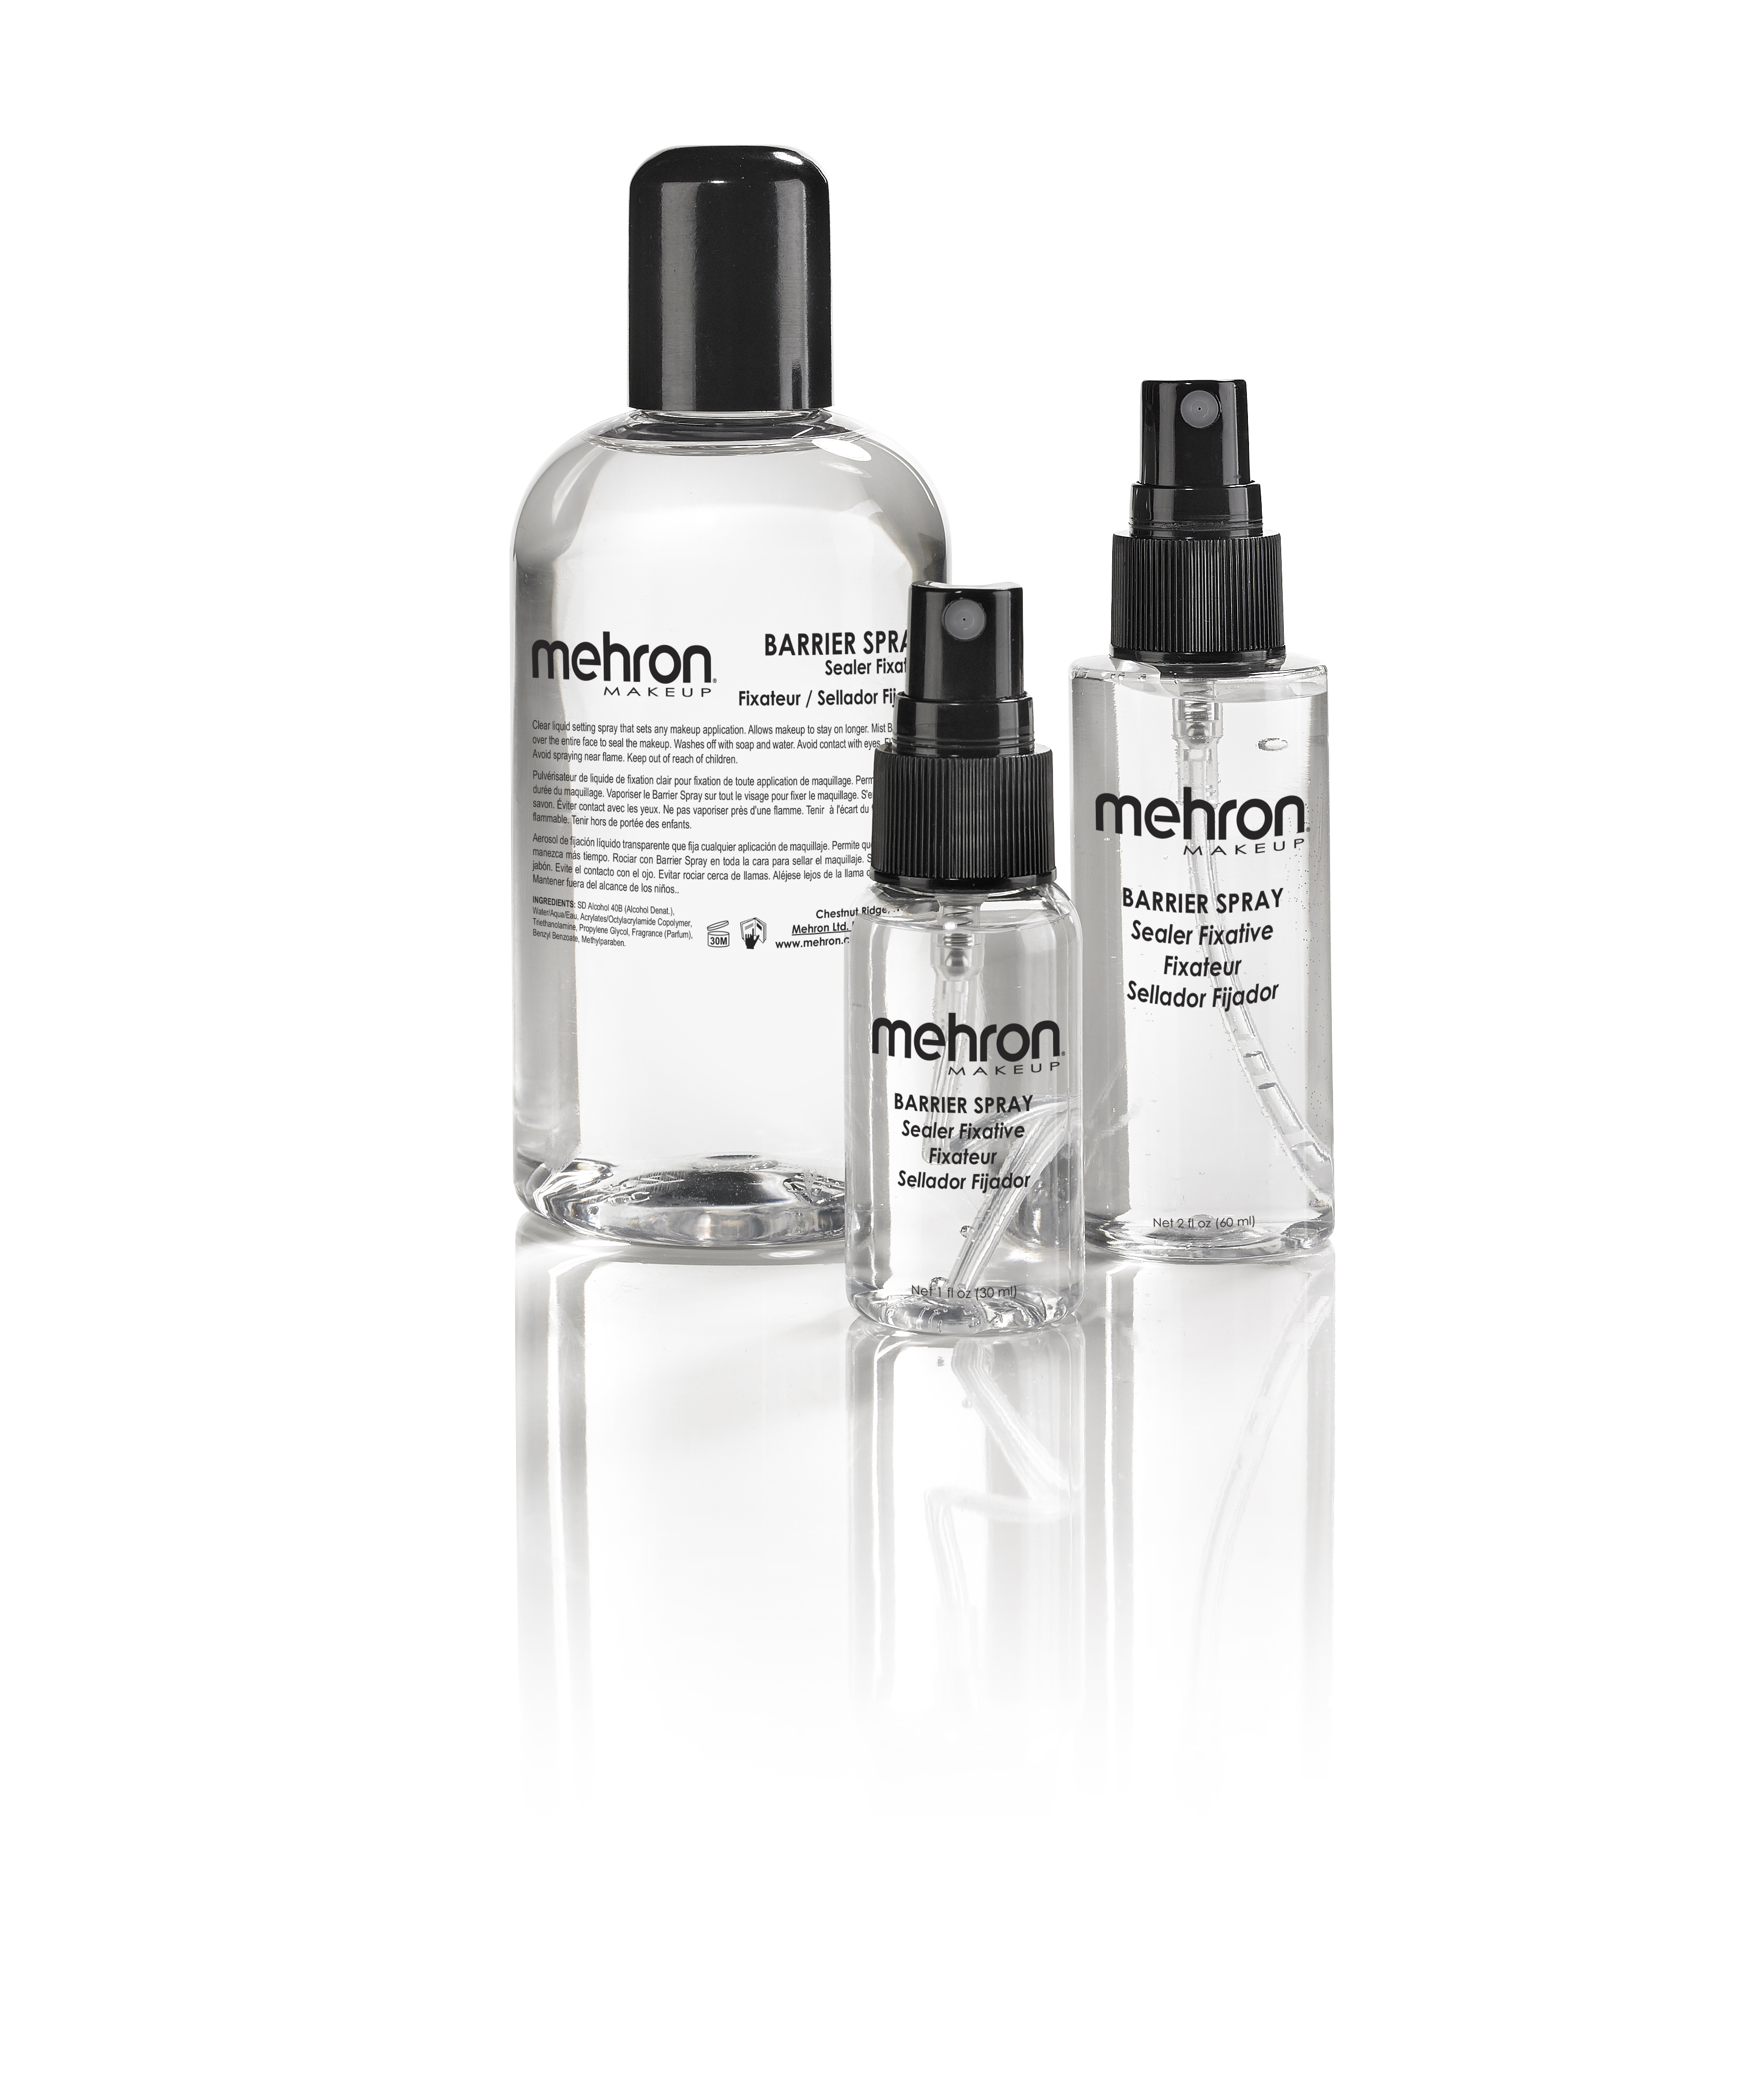 Mehron Makeup Liquid Face/ Body Theatrical Paint-Black /White 1 oz Bottles  -NEW